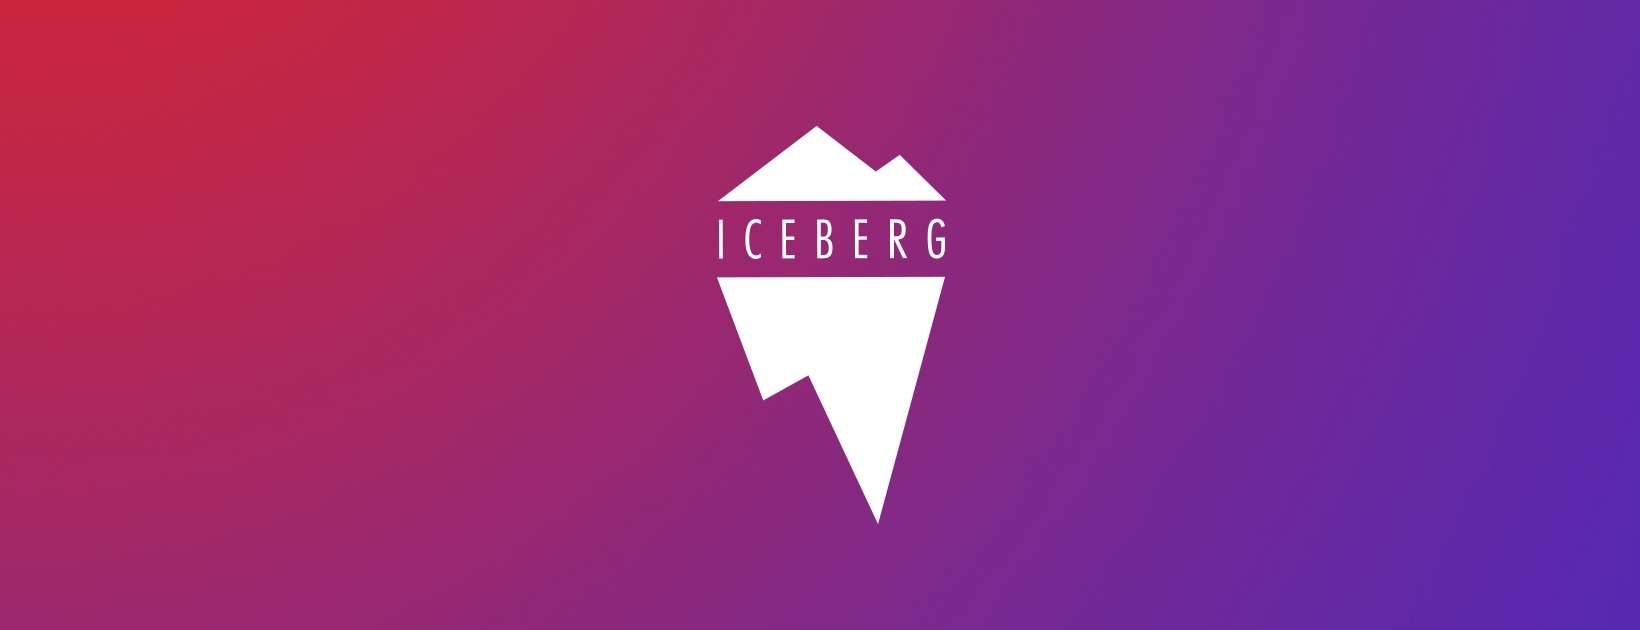 icebergfbcover_001.jpg